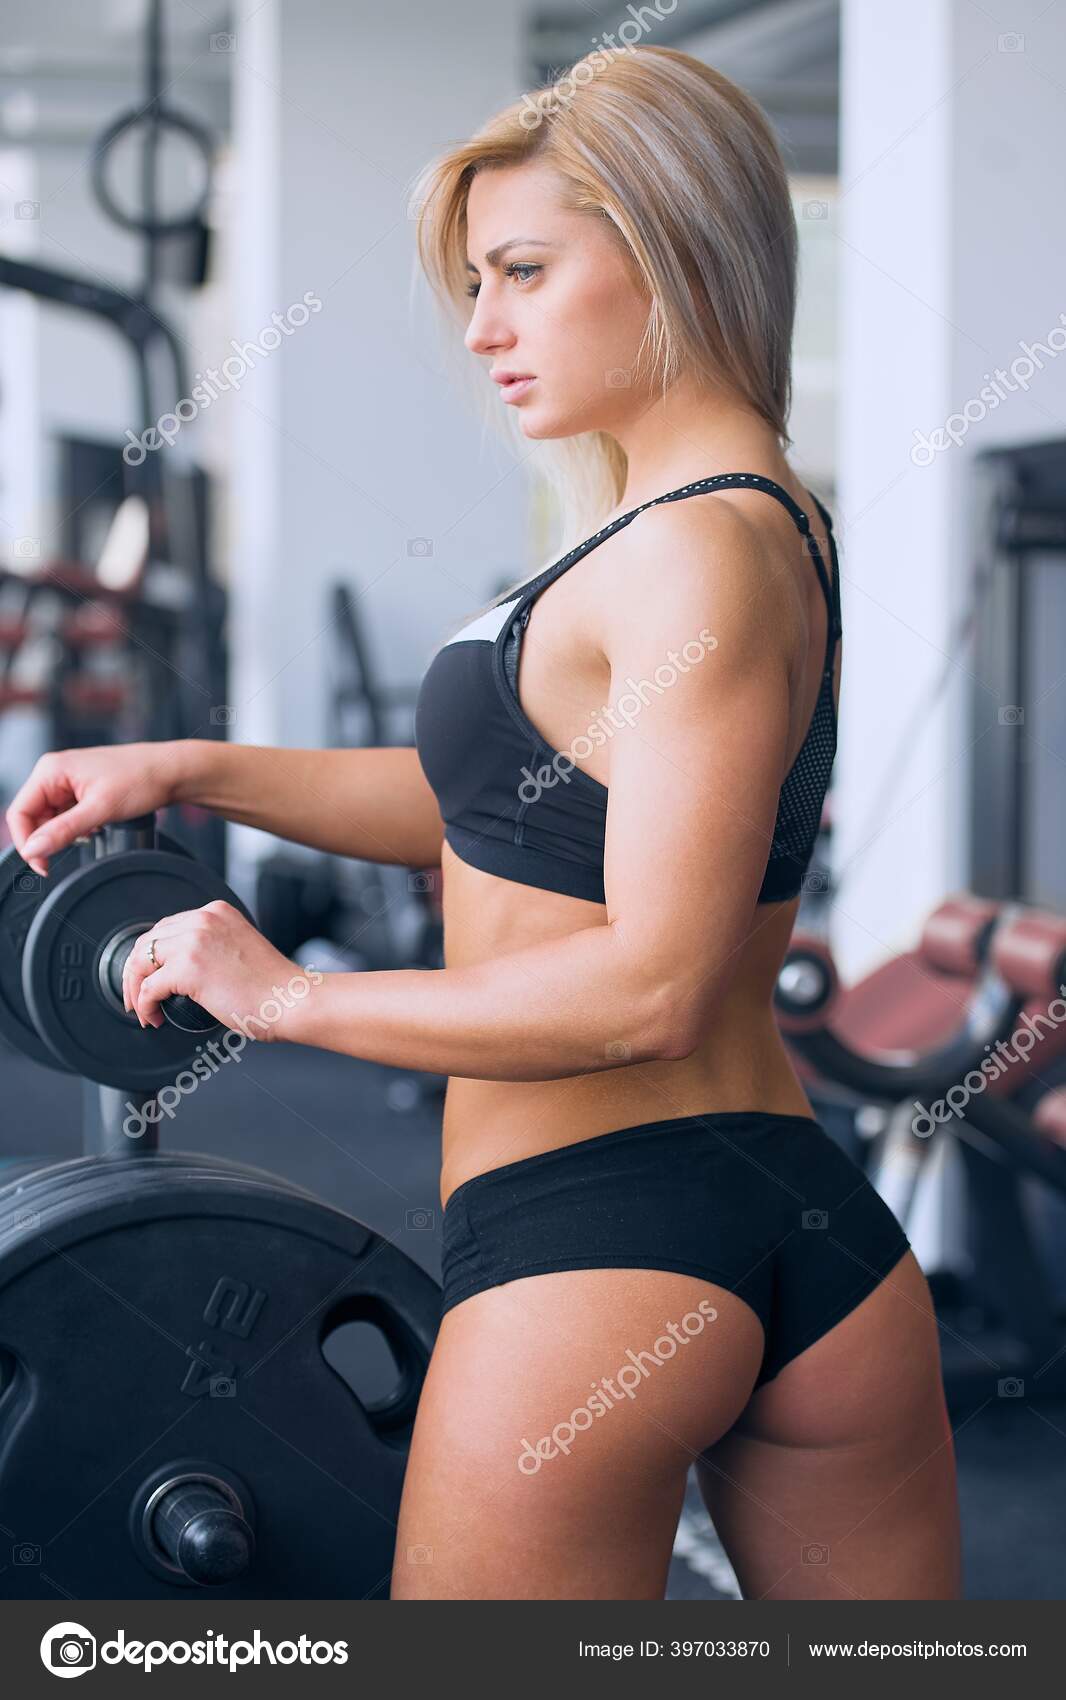 https://st4.depositphotos.com/6028496/39703/i/1600/depositphotos_397033870-stock-photo-sexy-sporty-woman-who-wears.jpg